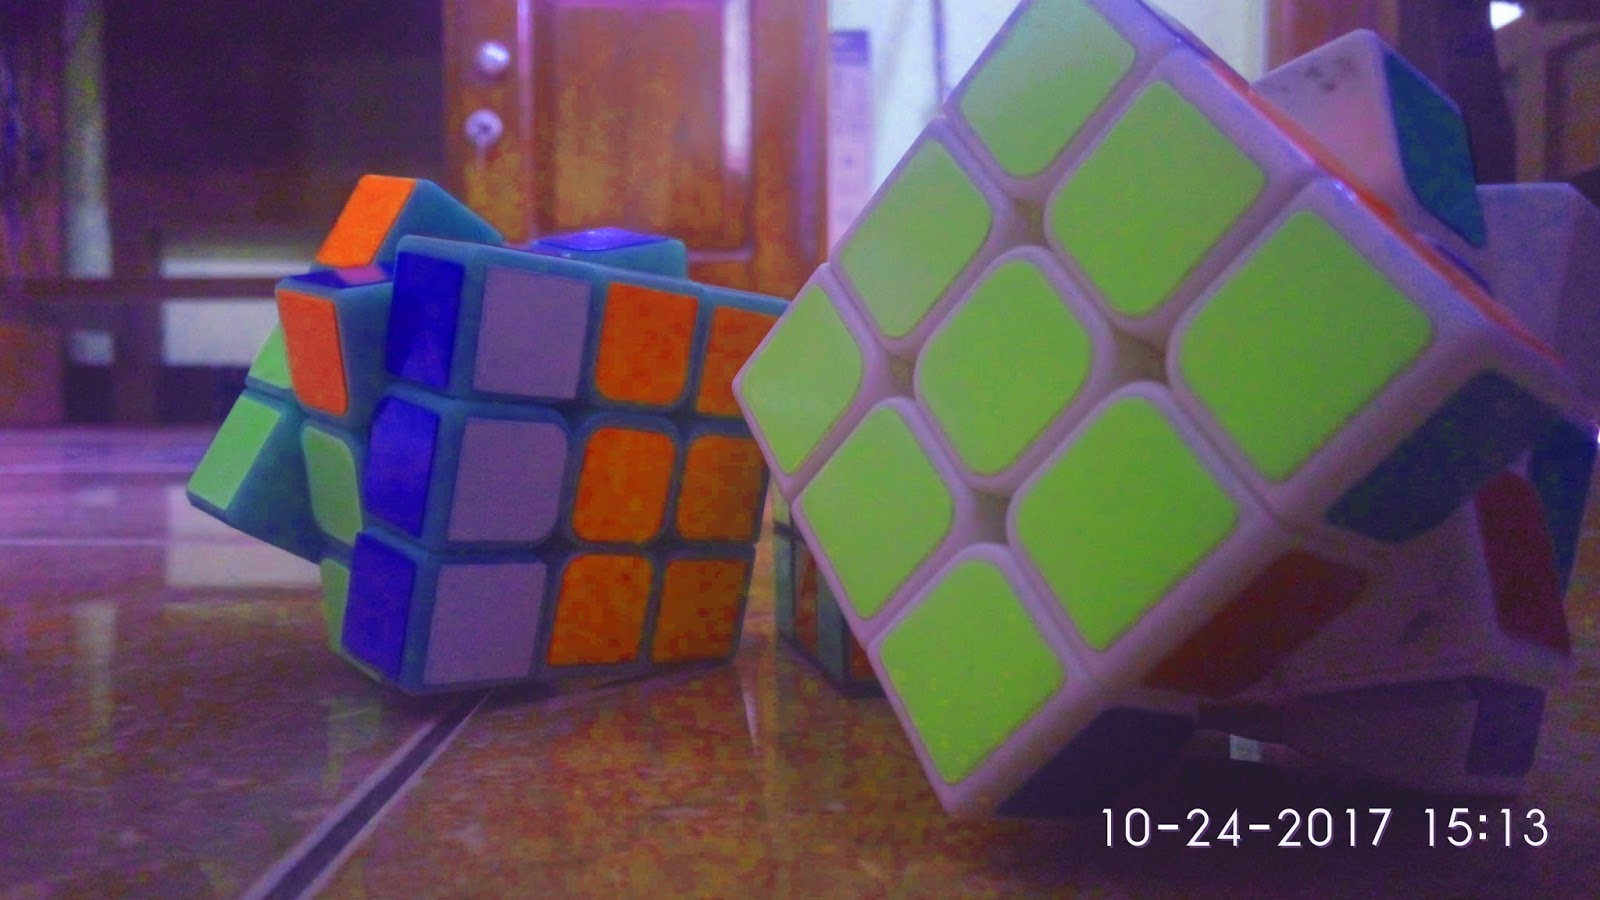 Кубики рубики крестики нолики глупые